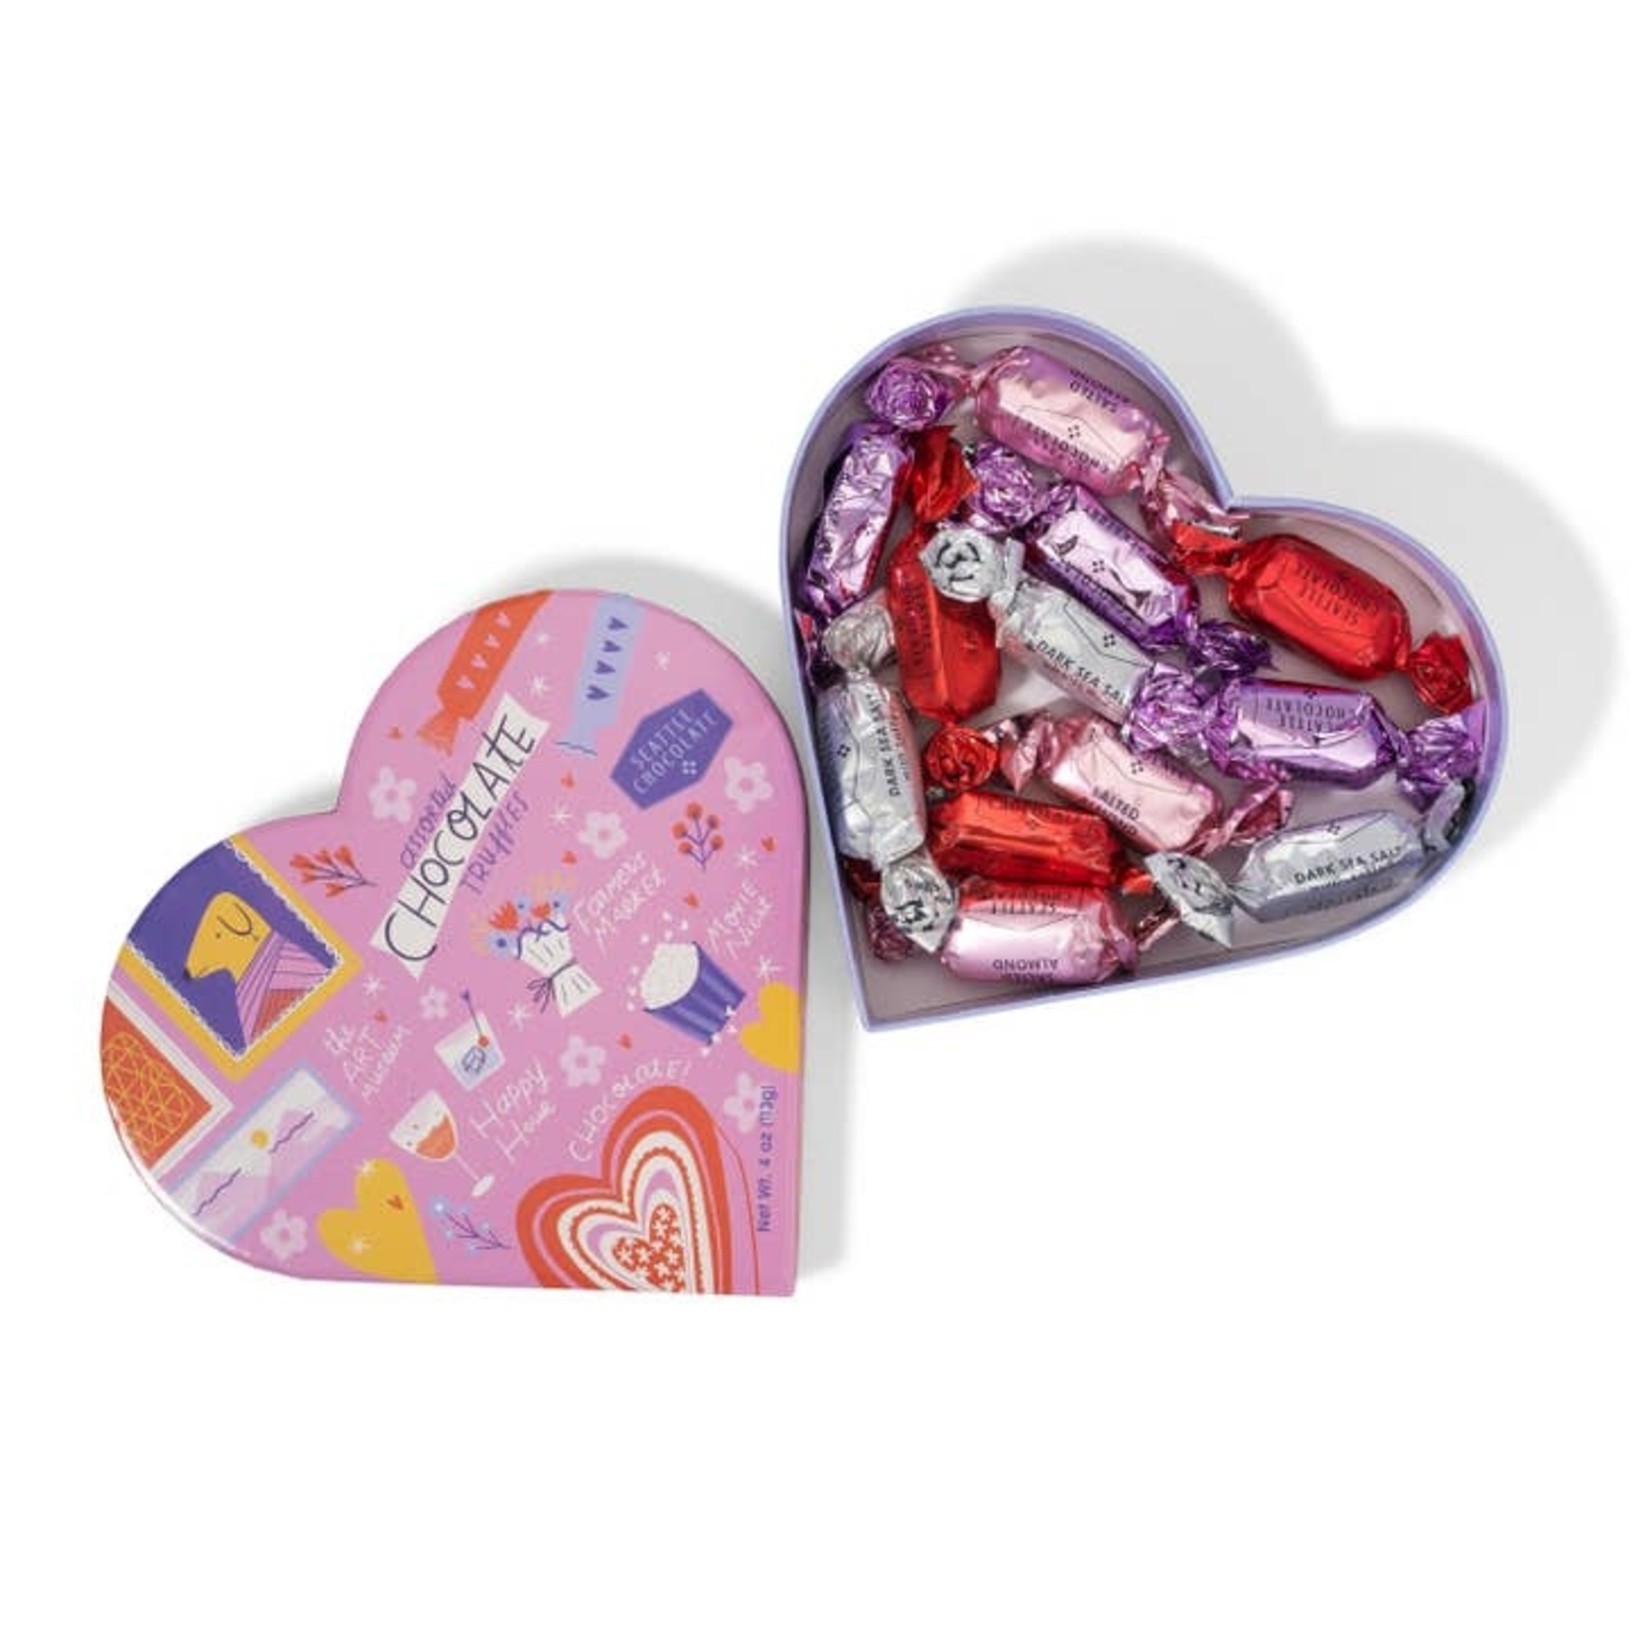 Seattle Chocolate Heart Box Truffles 4oz